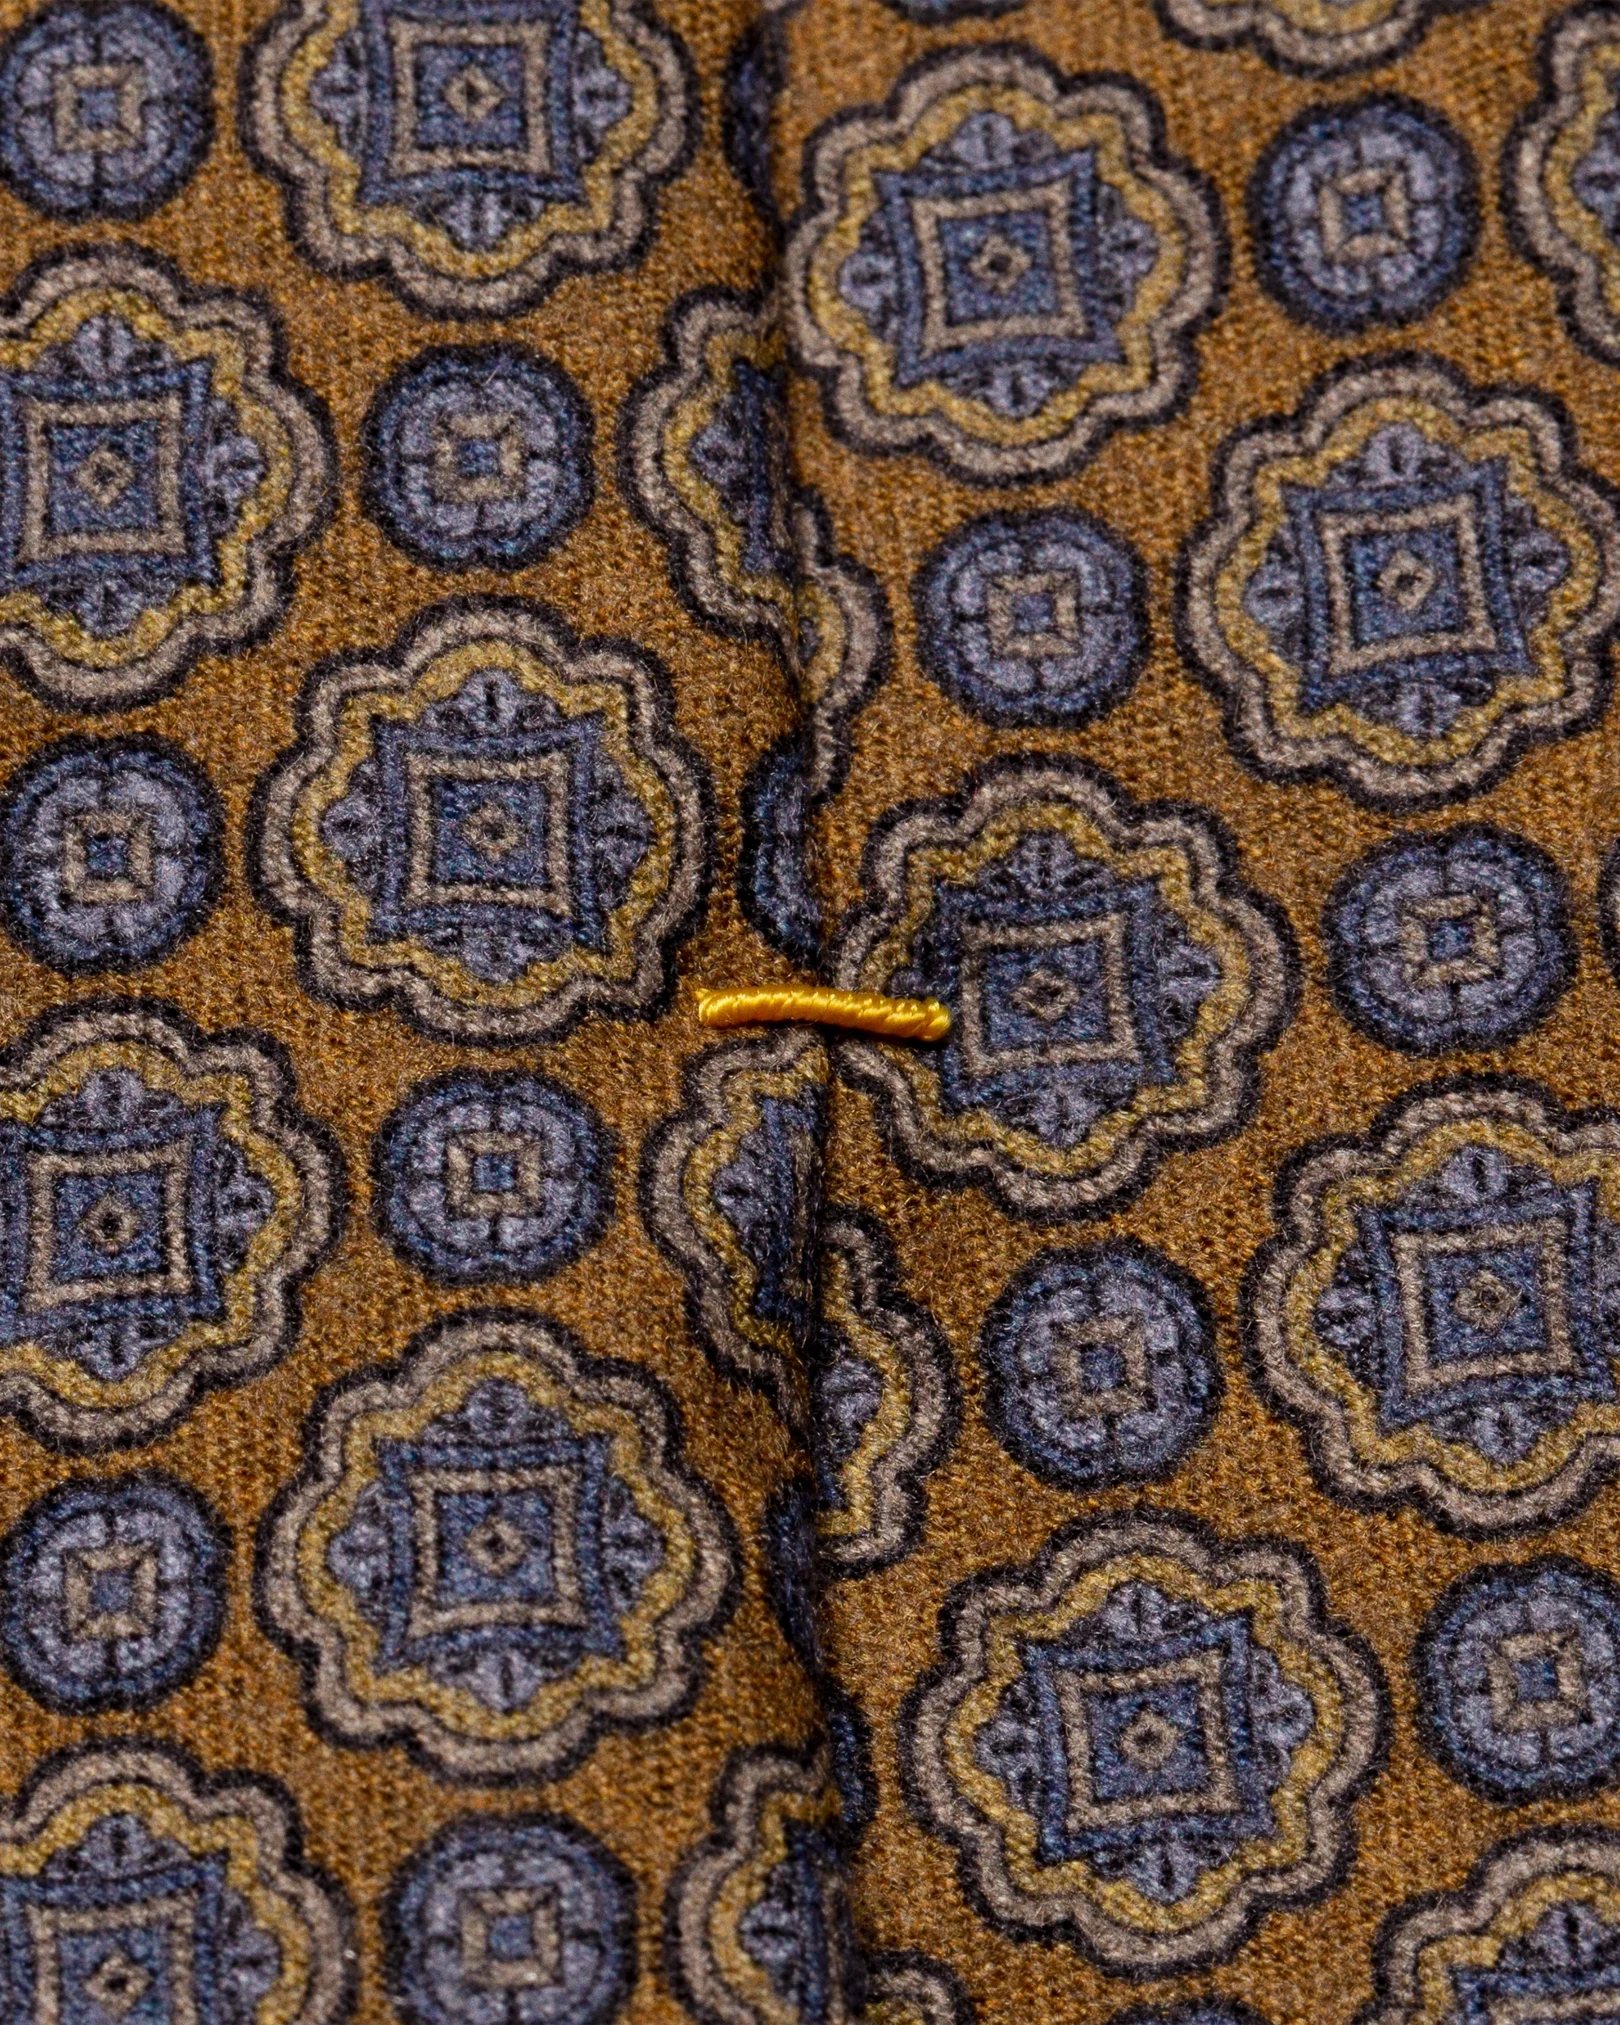 Eton - orange wool tie